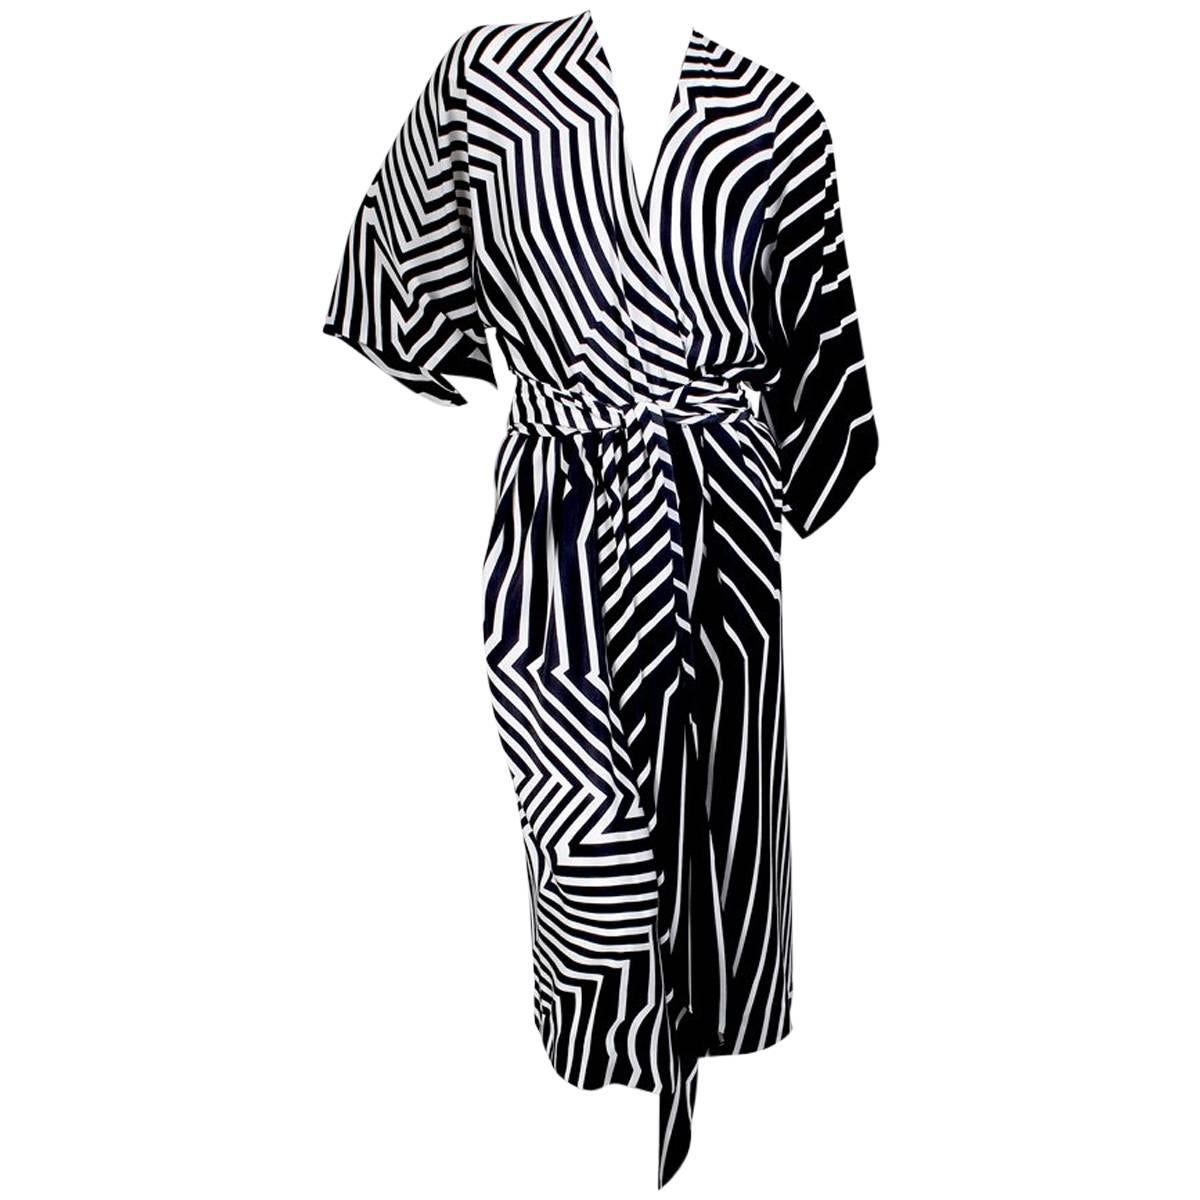 Halston Kimono Wrap Dress in B&W Geometric Print with Matching Belt circa 1970s